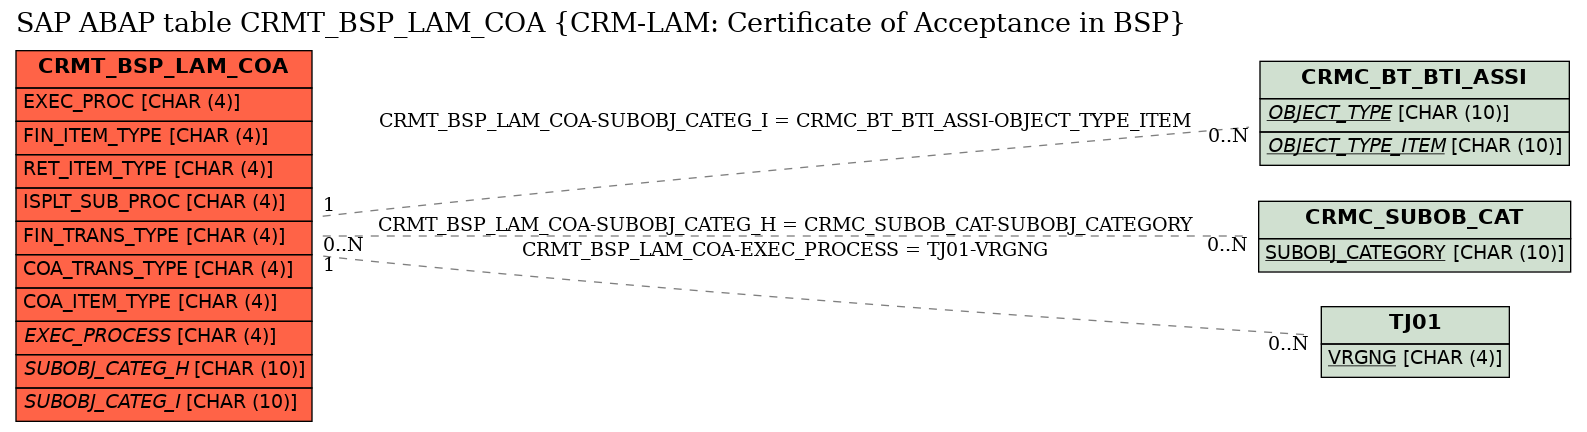 E-R Diagram for table CRMT_BSP_LAM_COA (CRM-LAM: Certificate of Acceptance in BSP)